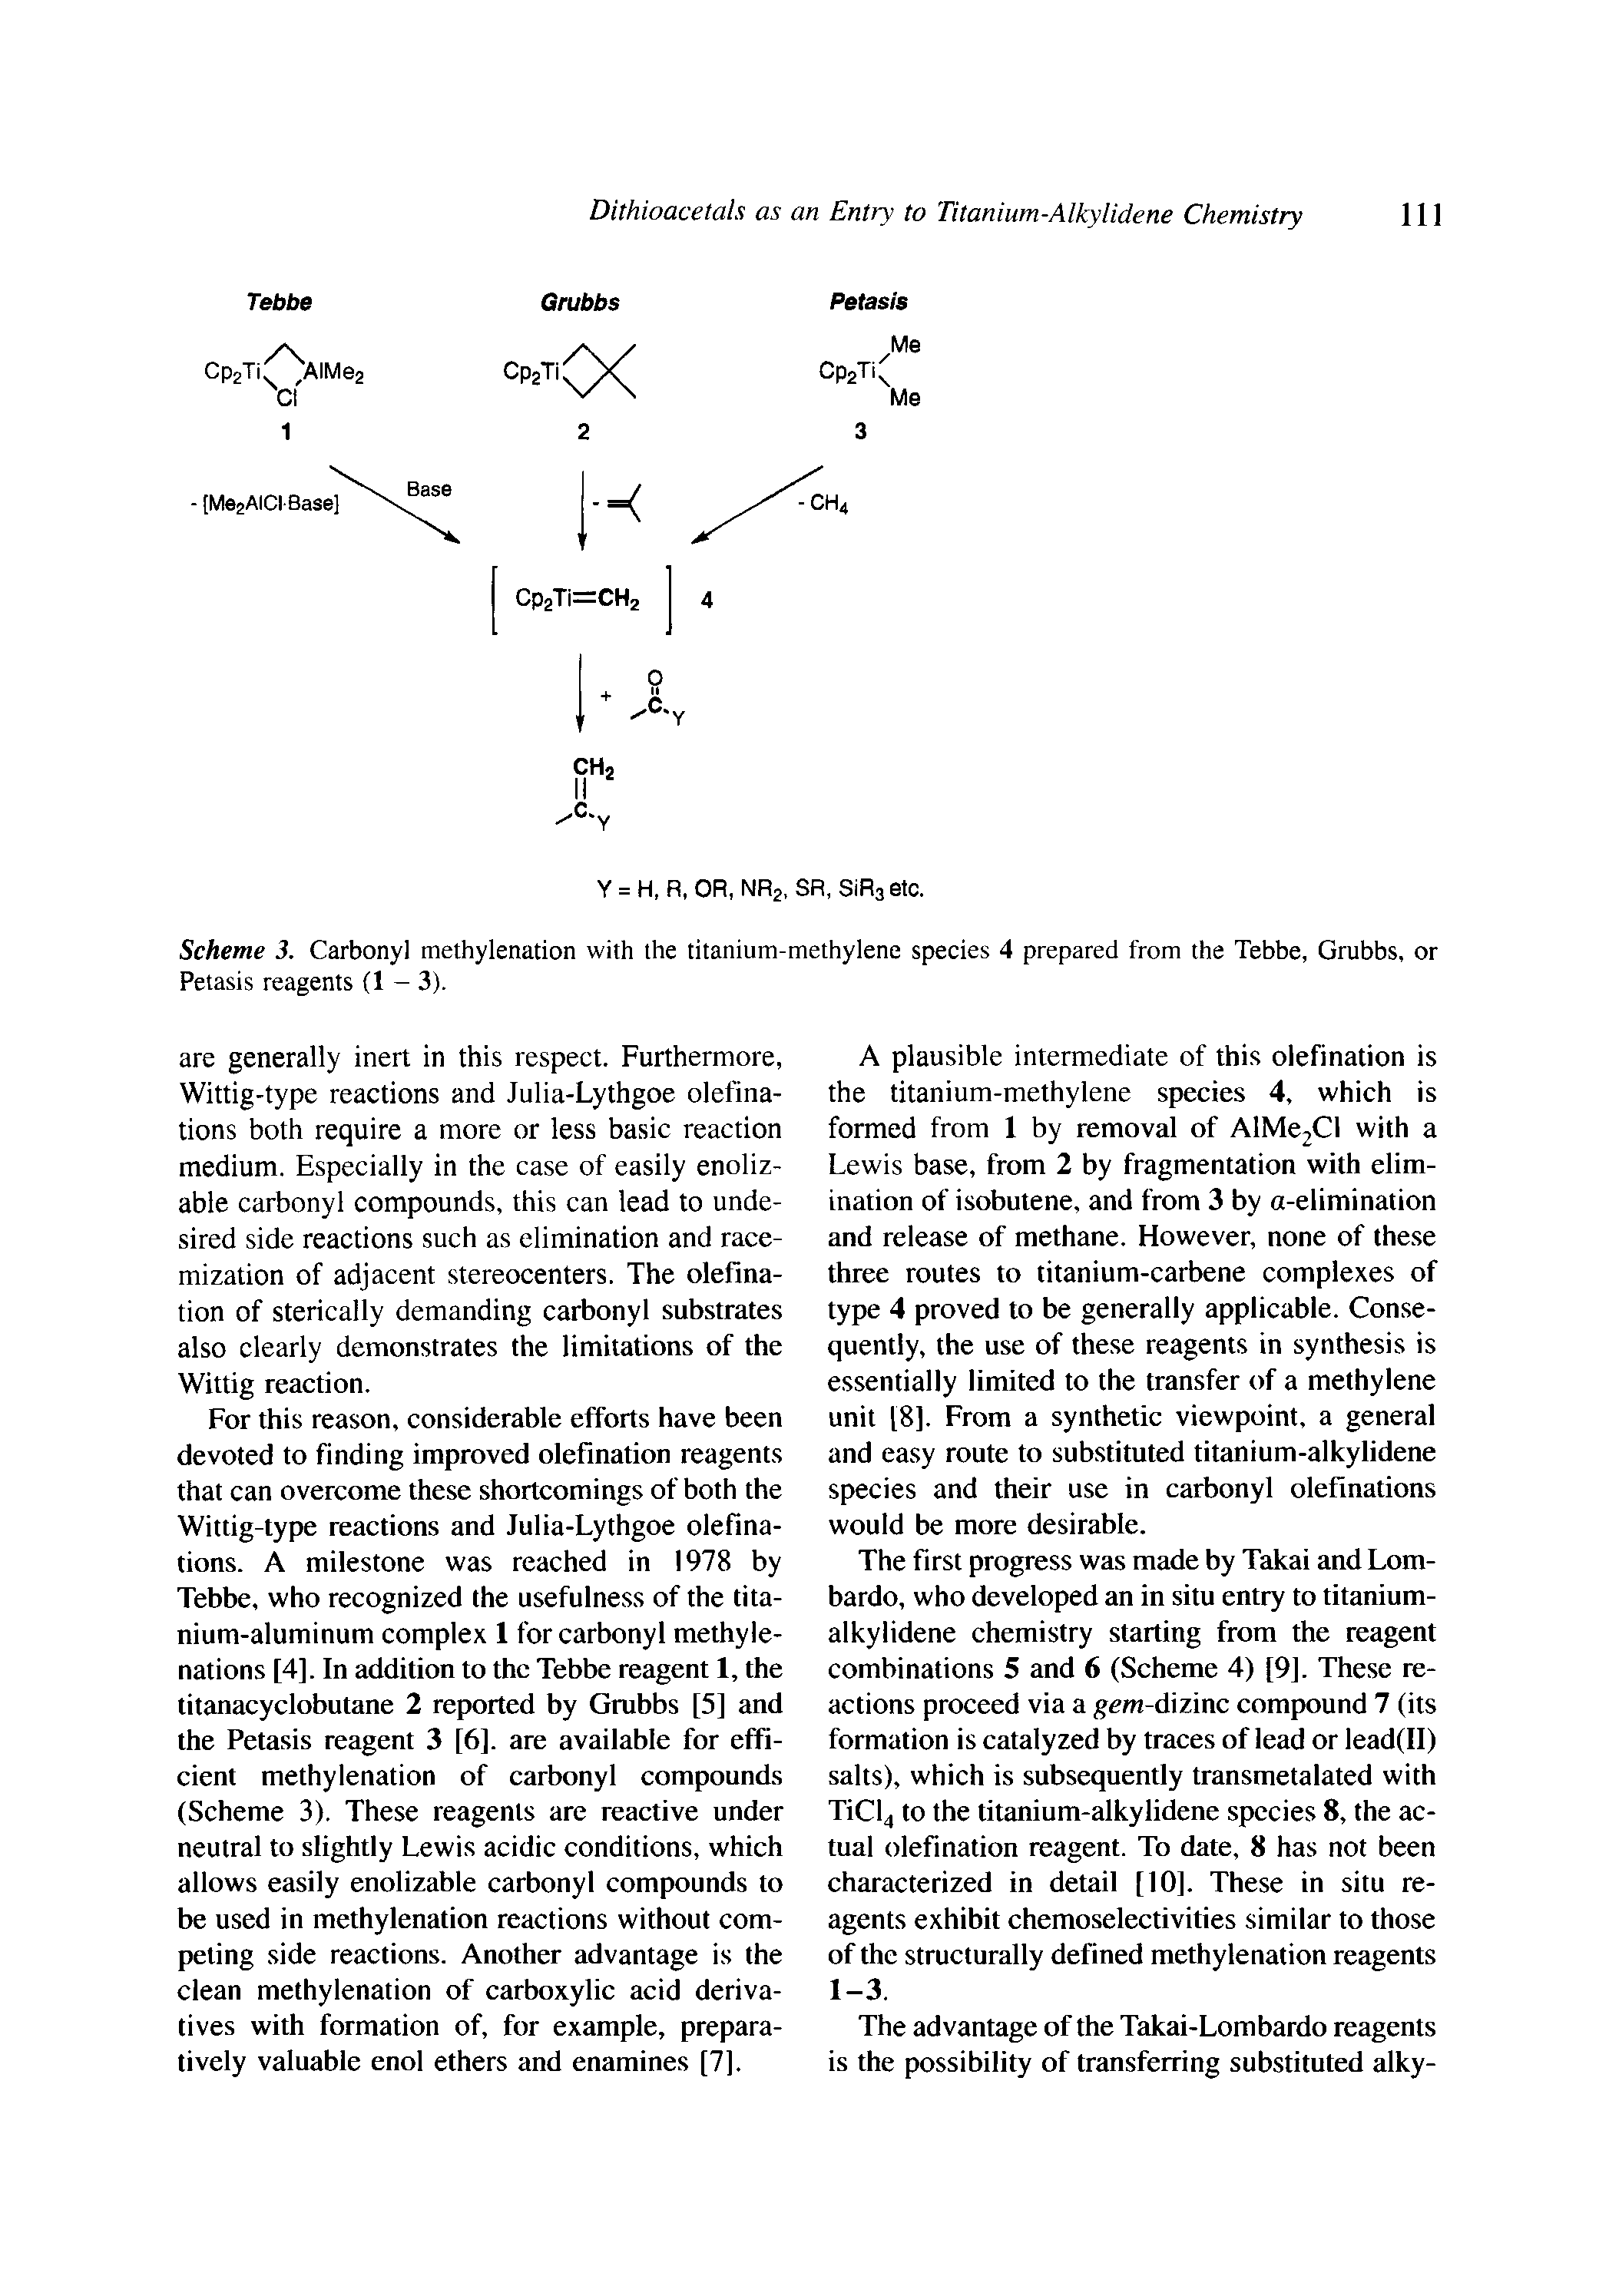 Scheme 3. Carbonyl methylenation with the titanium-methylene species 4 prepared from the Tebbe, Grubbs, or Petasis reagents (1 - 3).